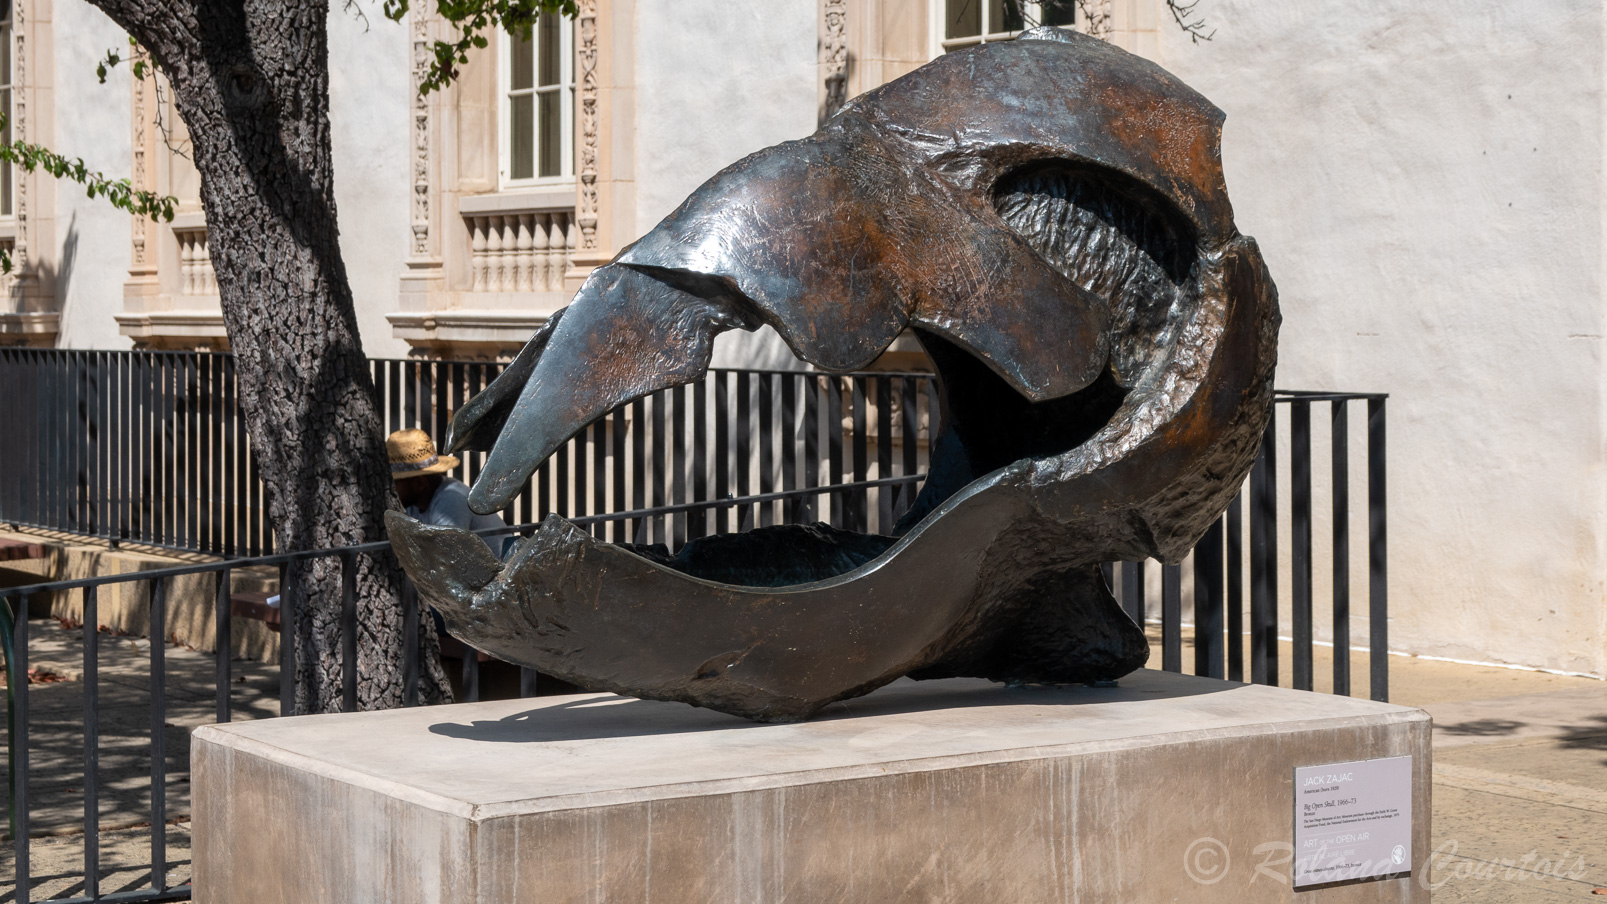 Bronze de Jack Zajac "Big open Skull" (Grand crâne ouvert).